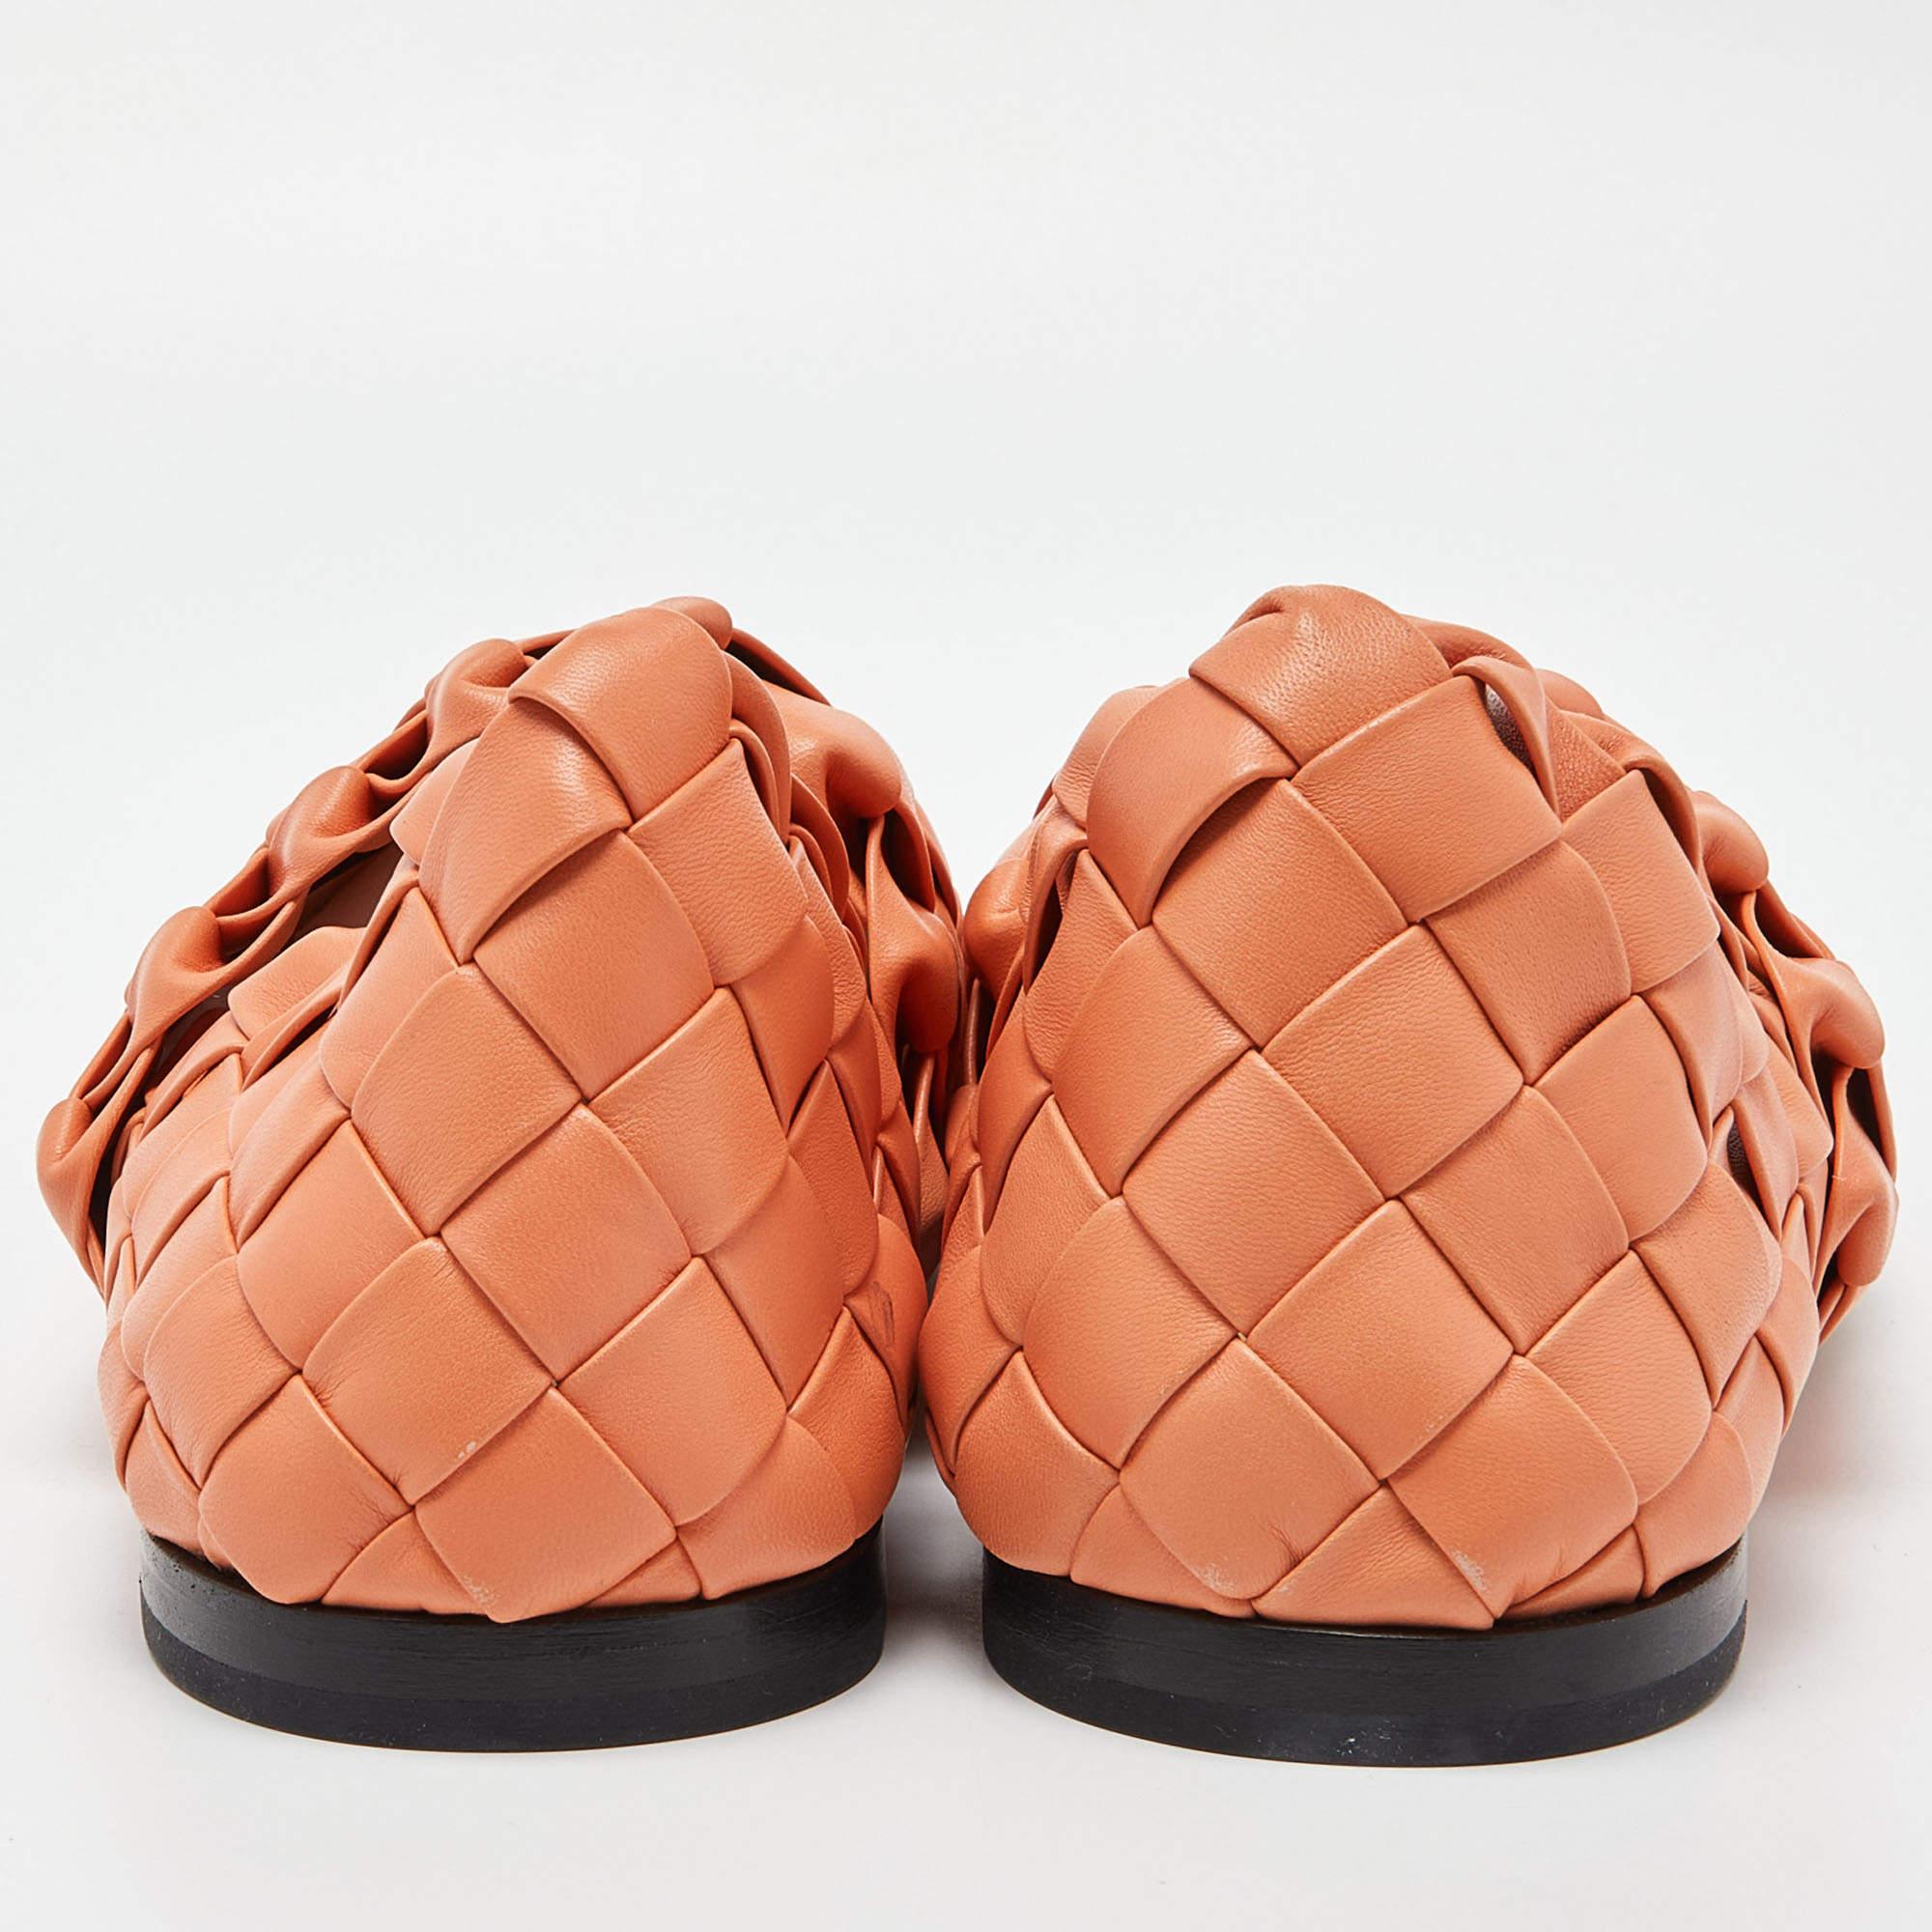 Bottega Veneta Orange Woven Leather Smoking Slippers Size 45 2